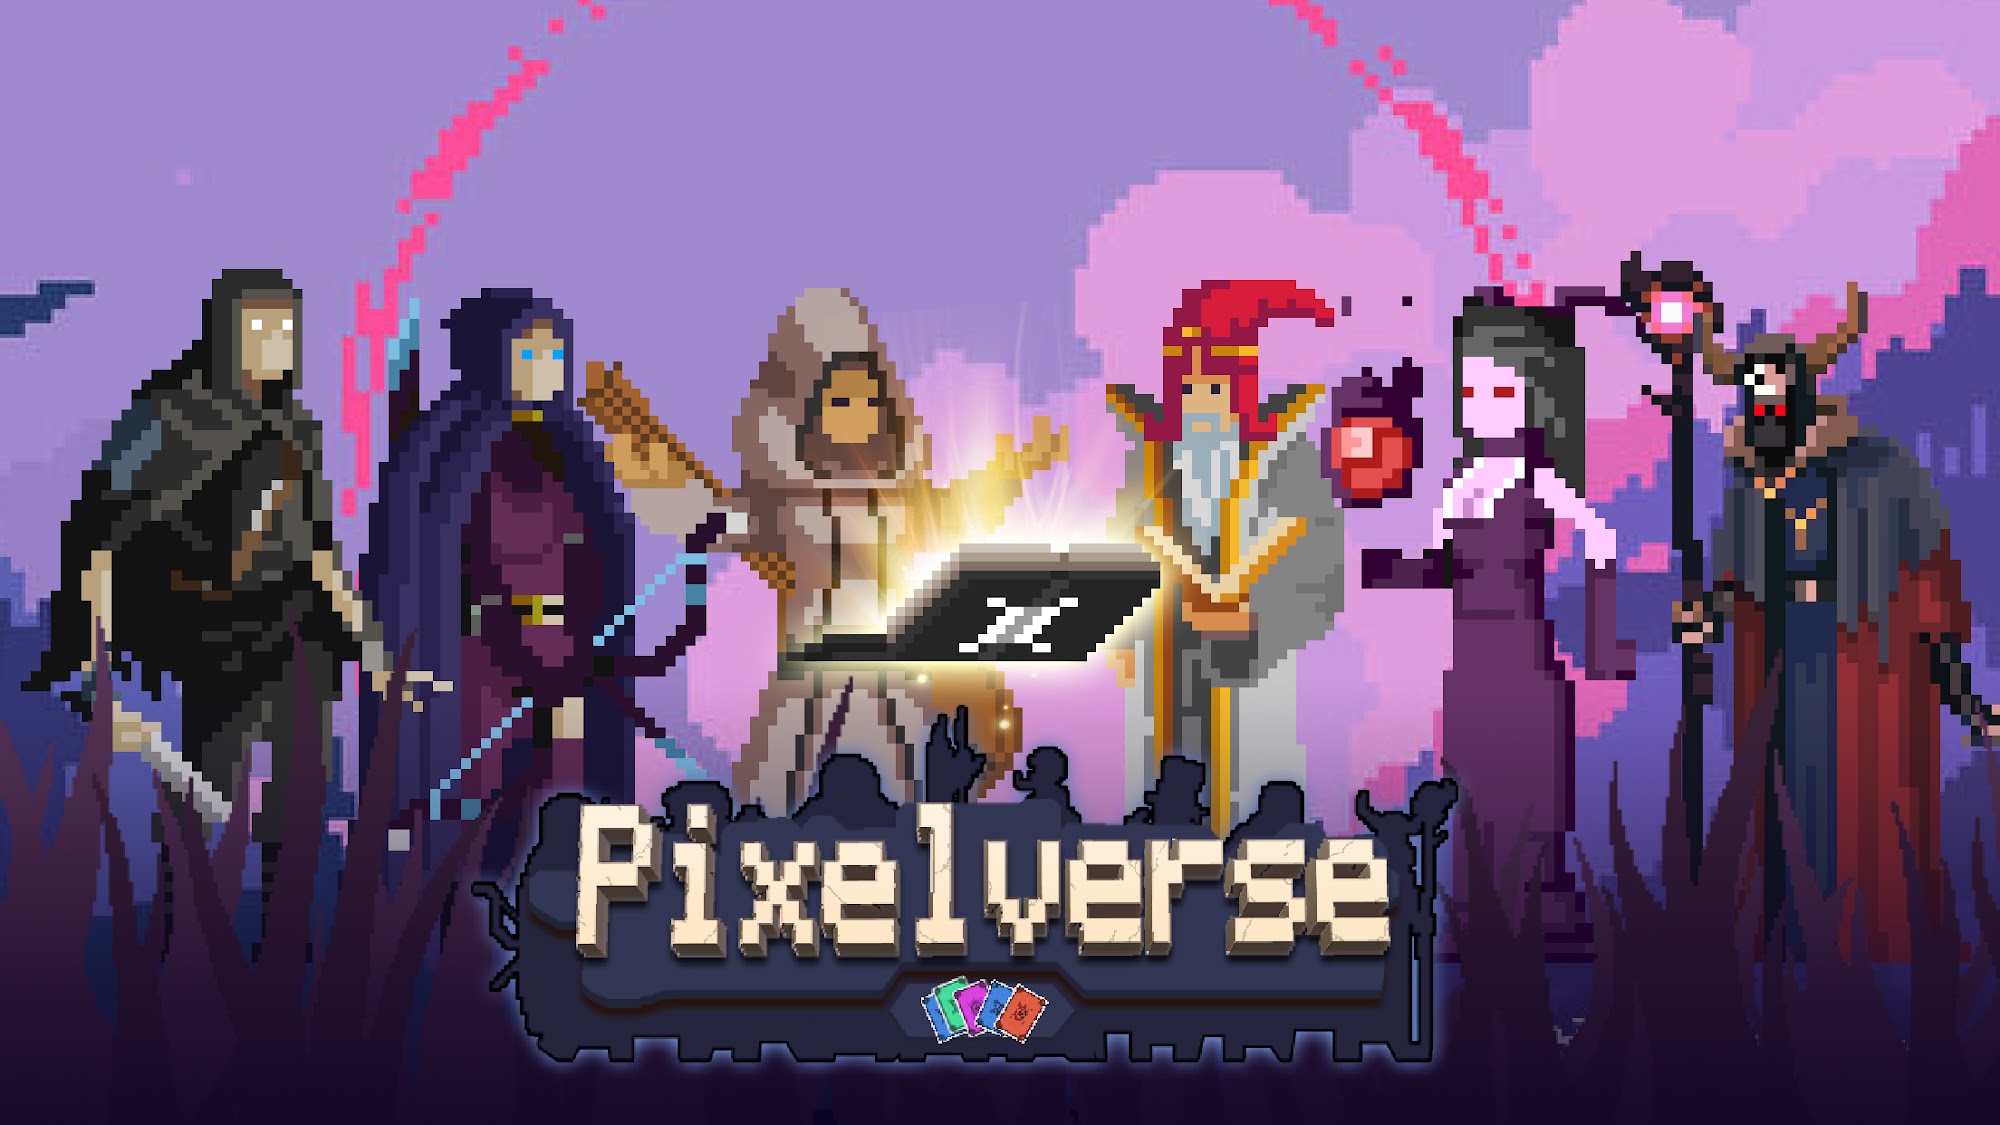 Baixar Pixelverse - Deck Heroes para Android grátis.